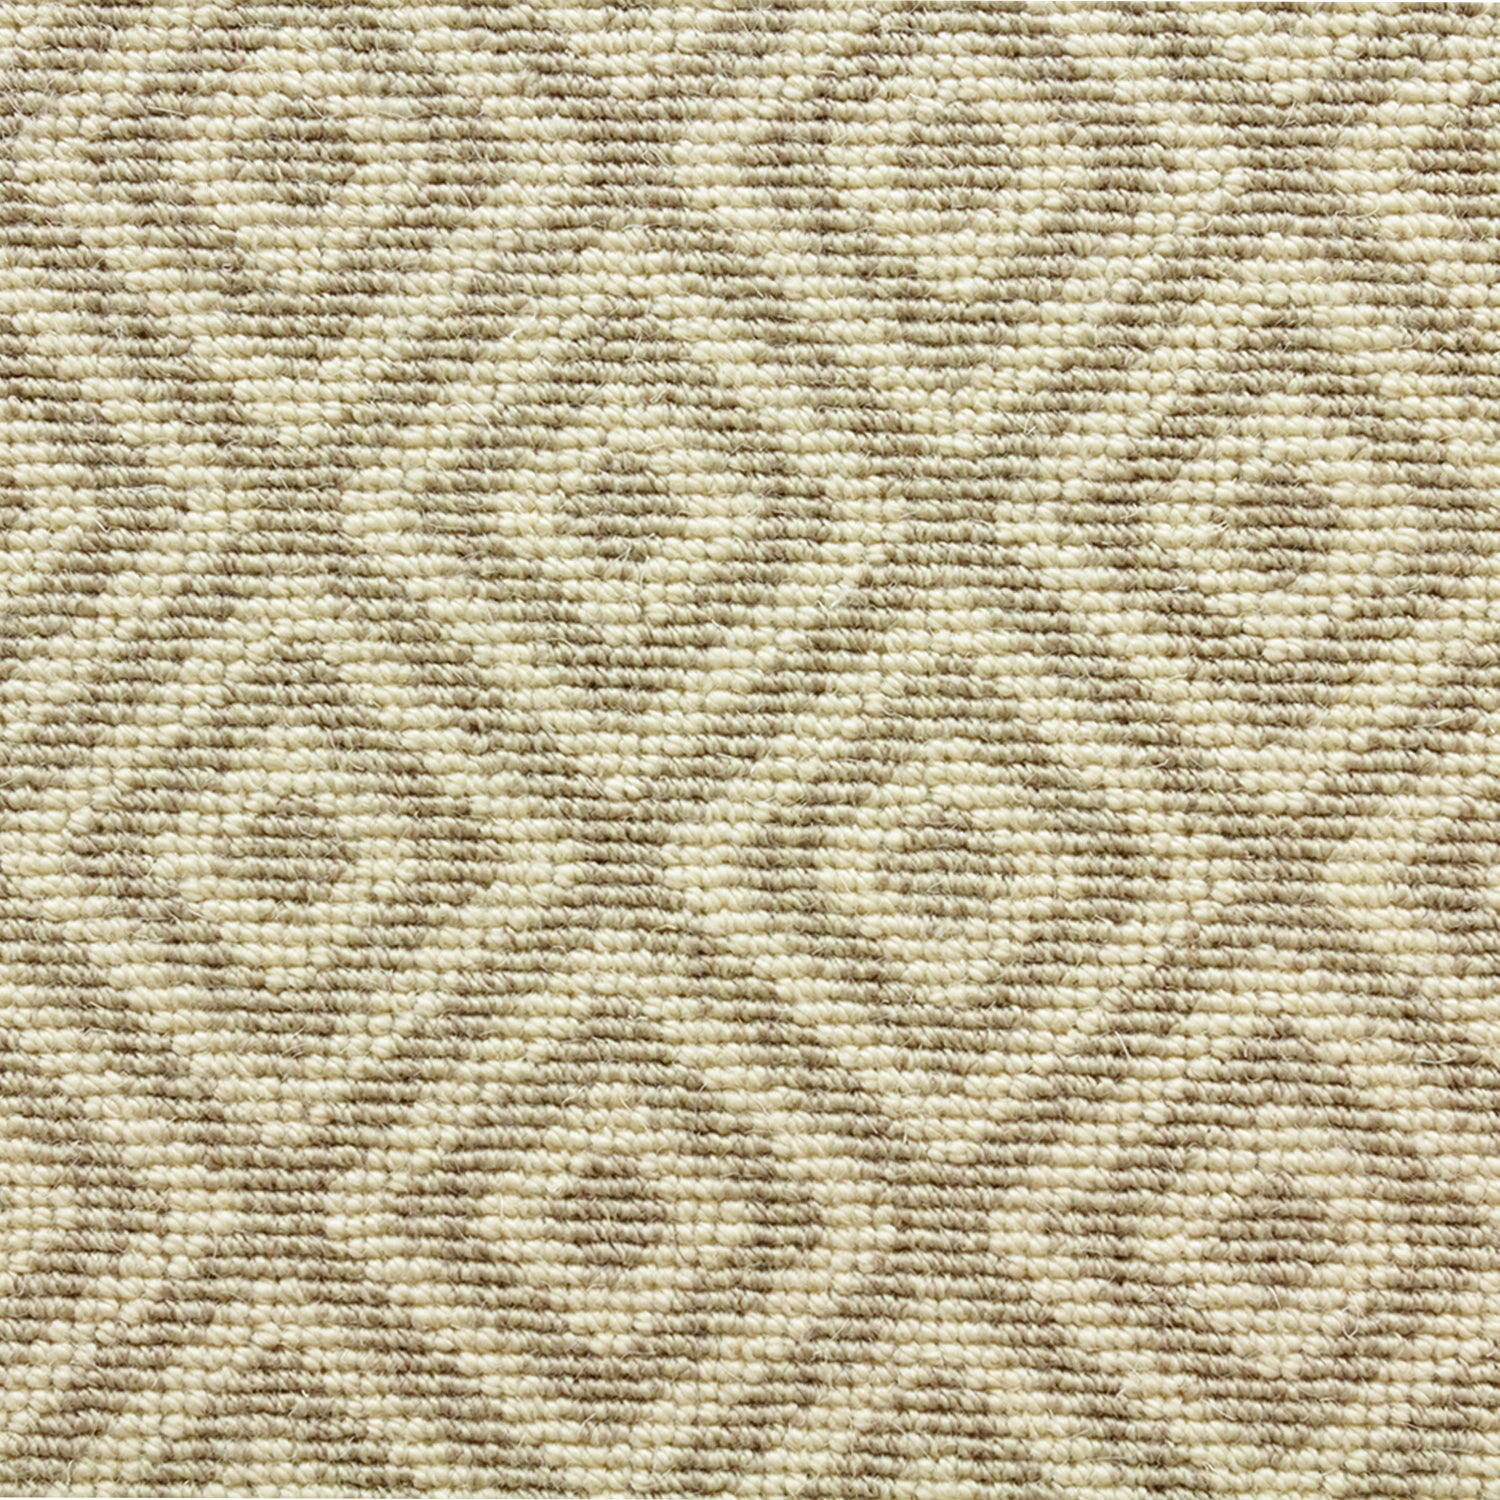 Wool-blend broadloom carpet swatch in a repeating diamond print in light brown on a cream field.